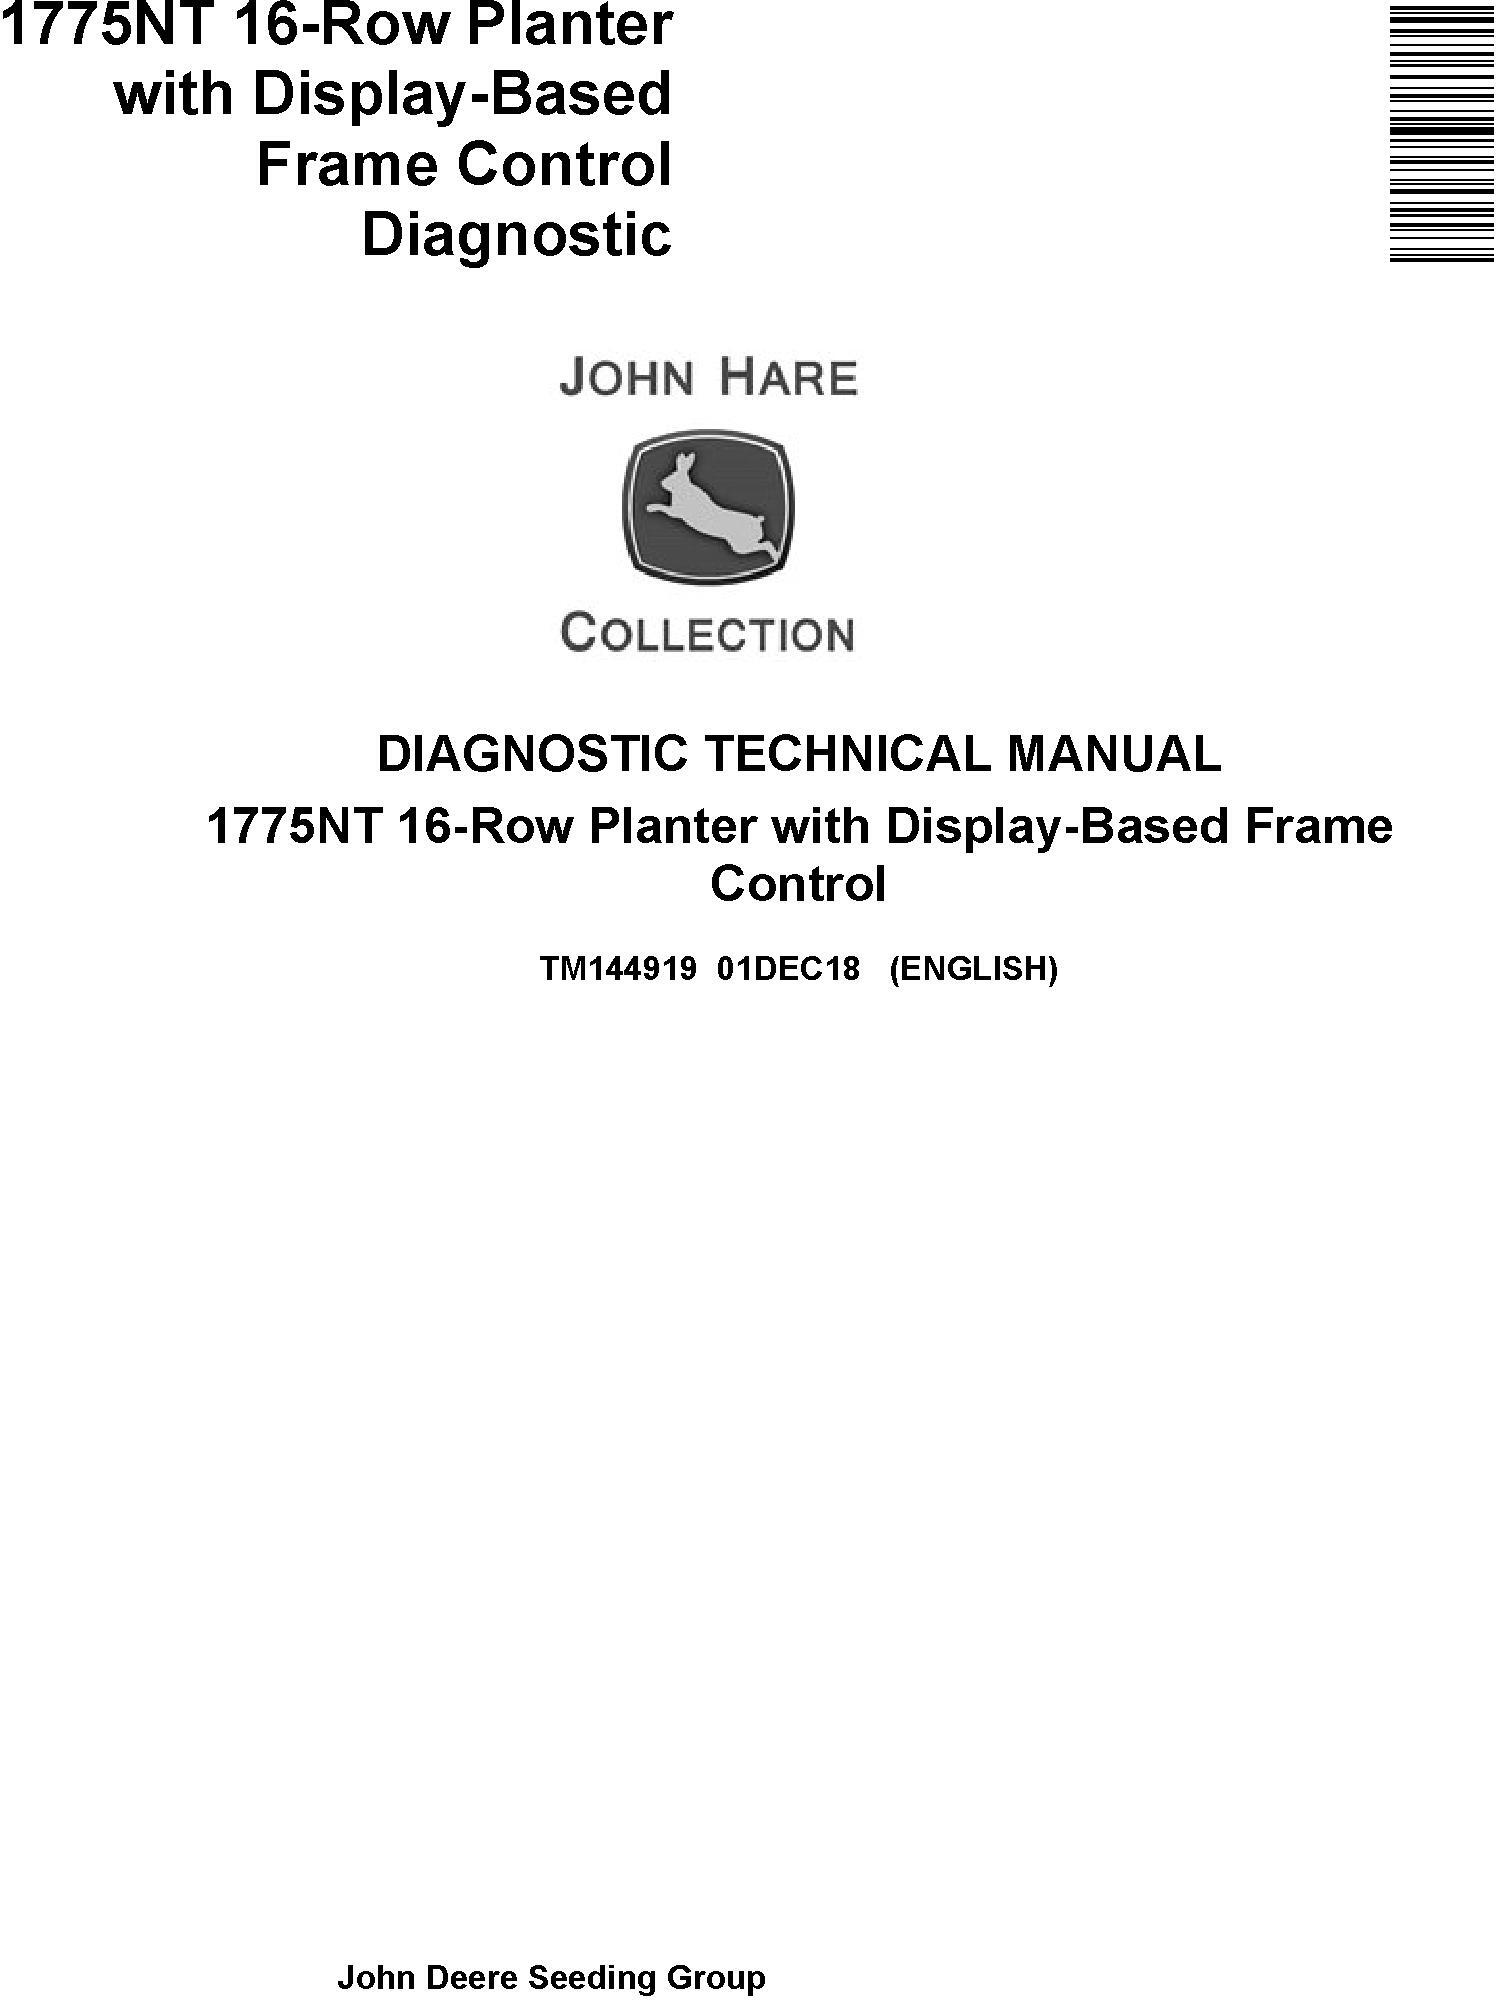 John Deere 1775NT 16row Planter w.Display-Based Frame Control Diagnostic Technical Manual (TM144919)